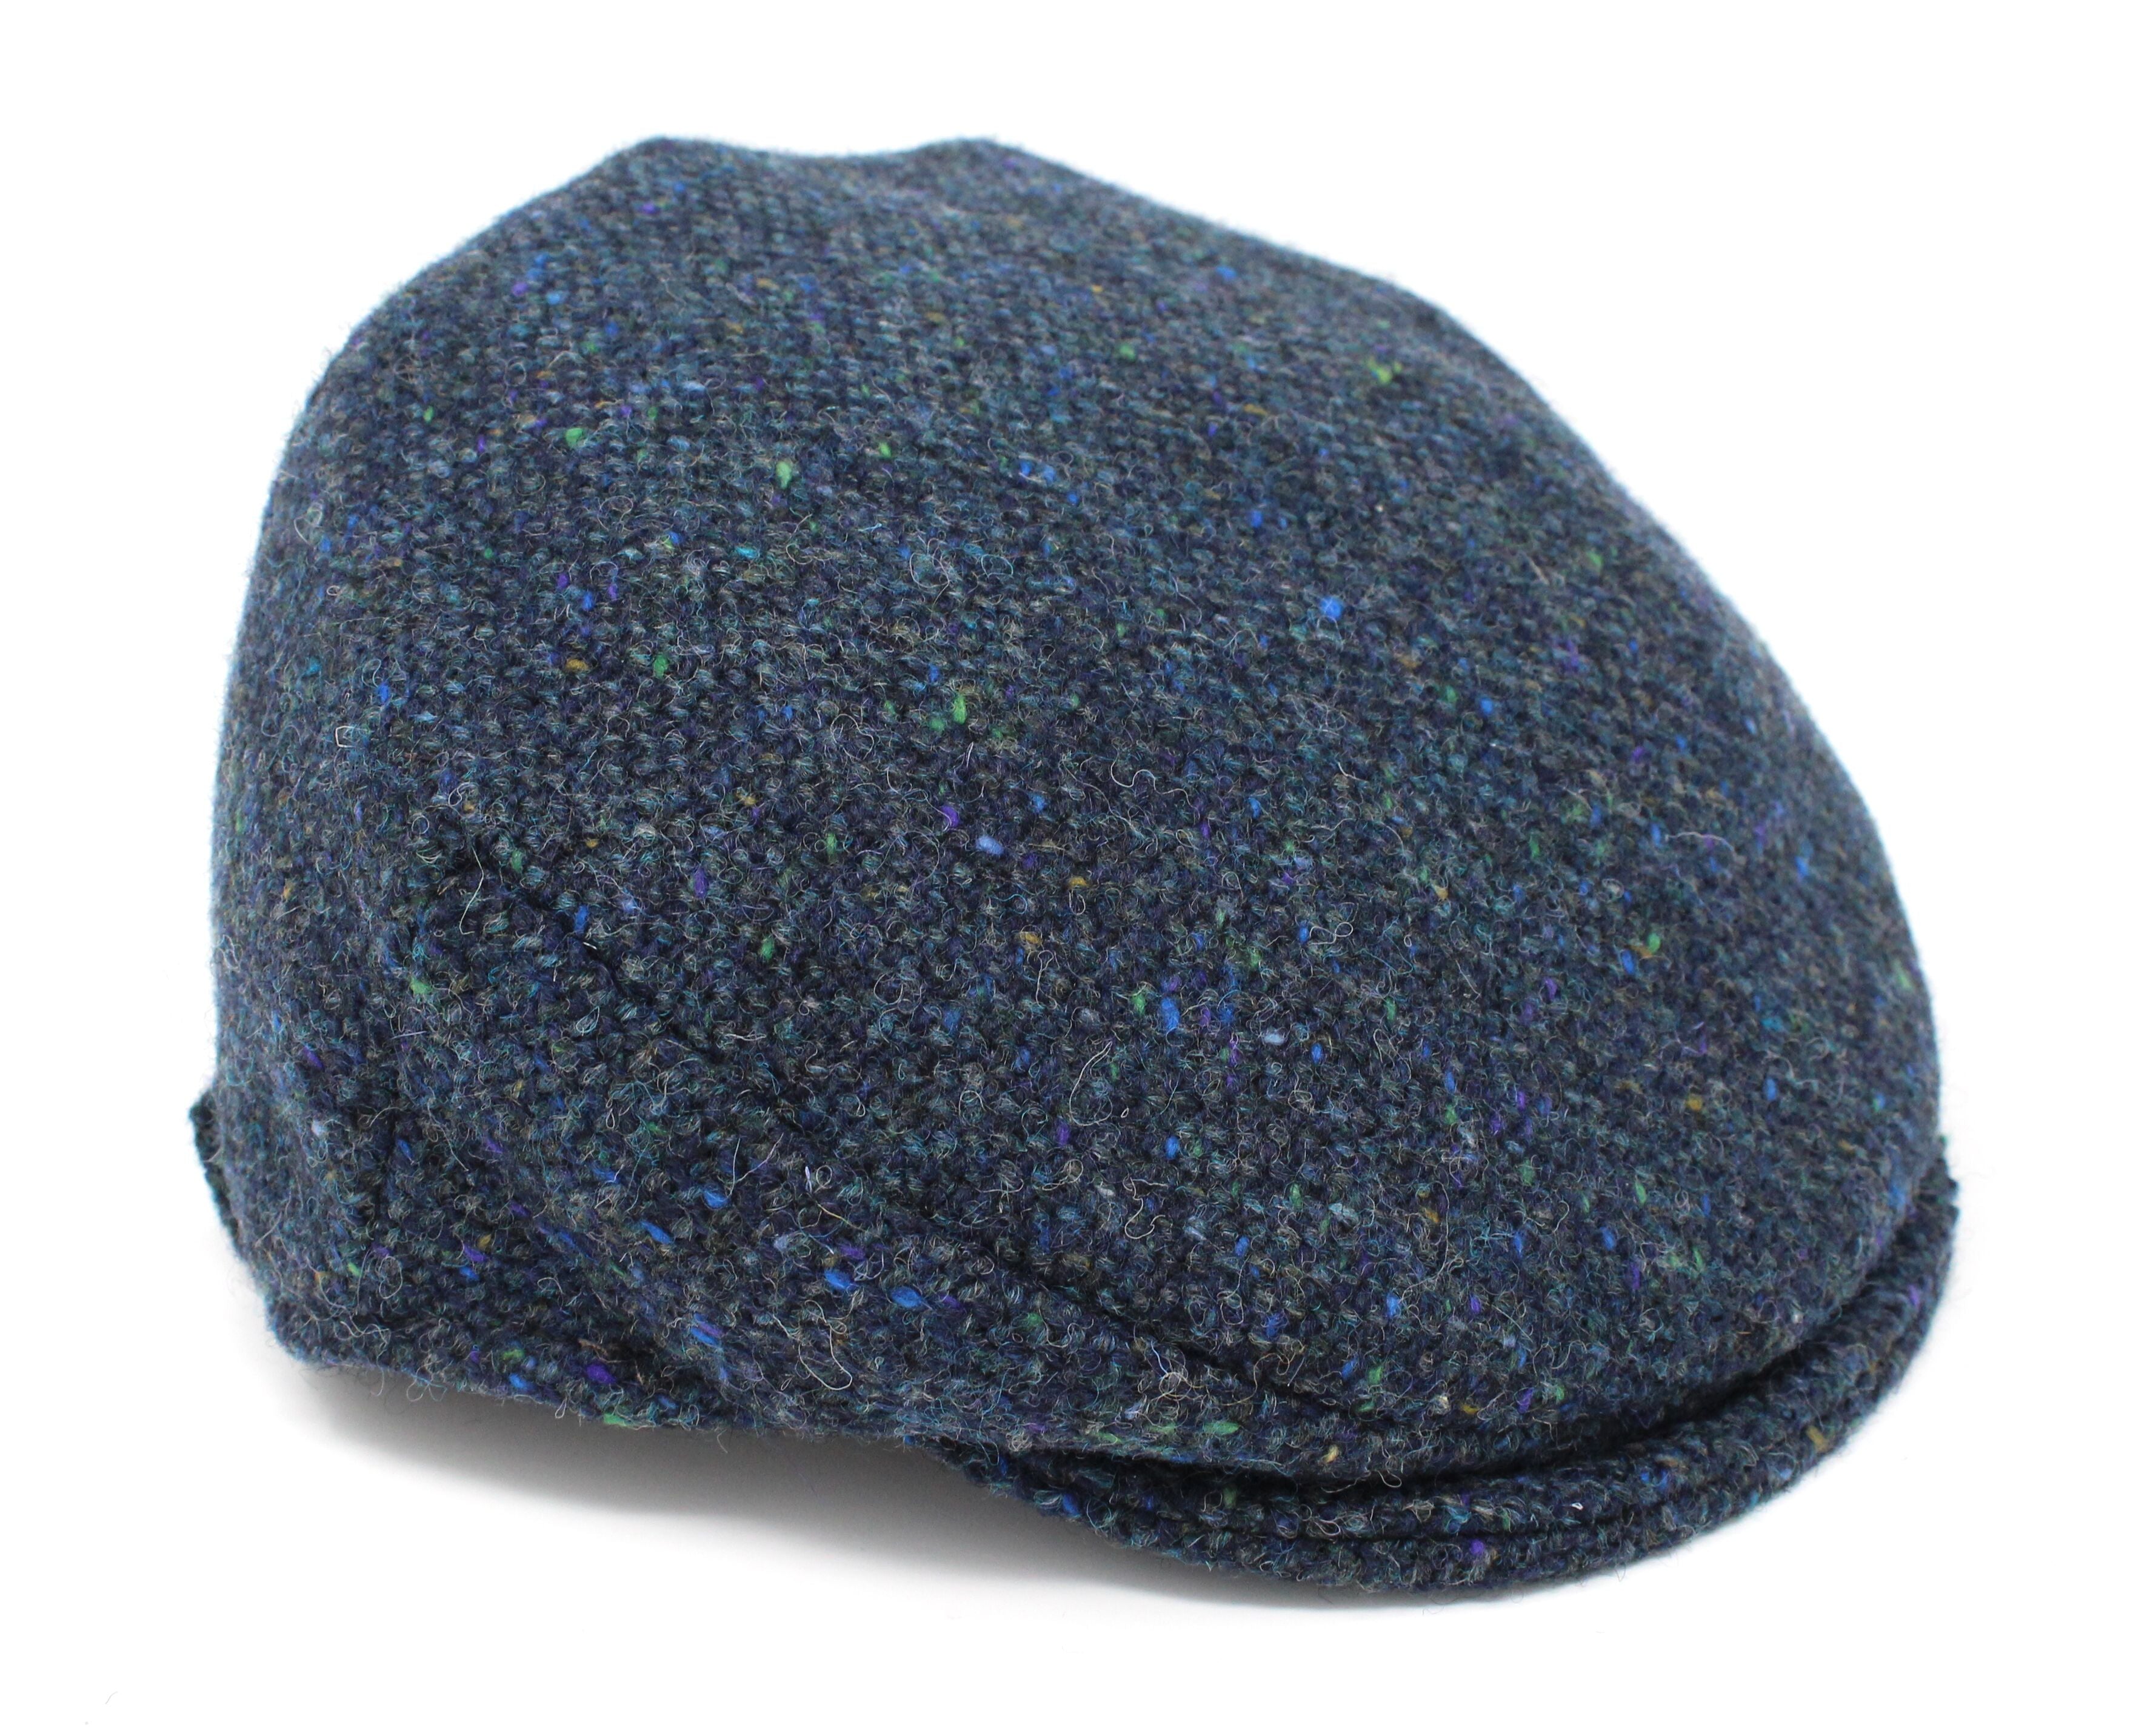 Children's Vintage Style Tweed Cap by Hanna Hats